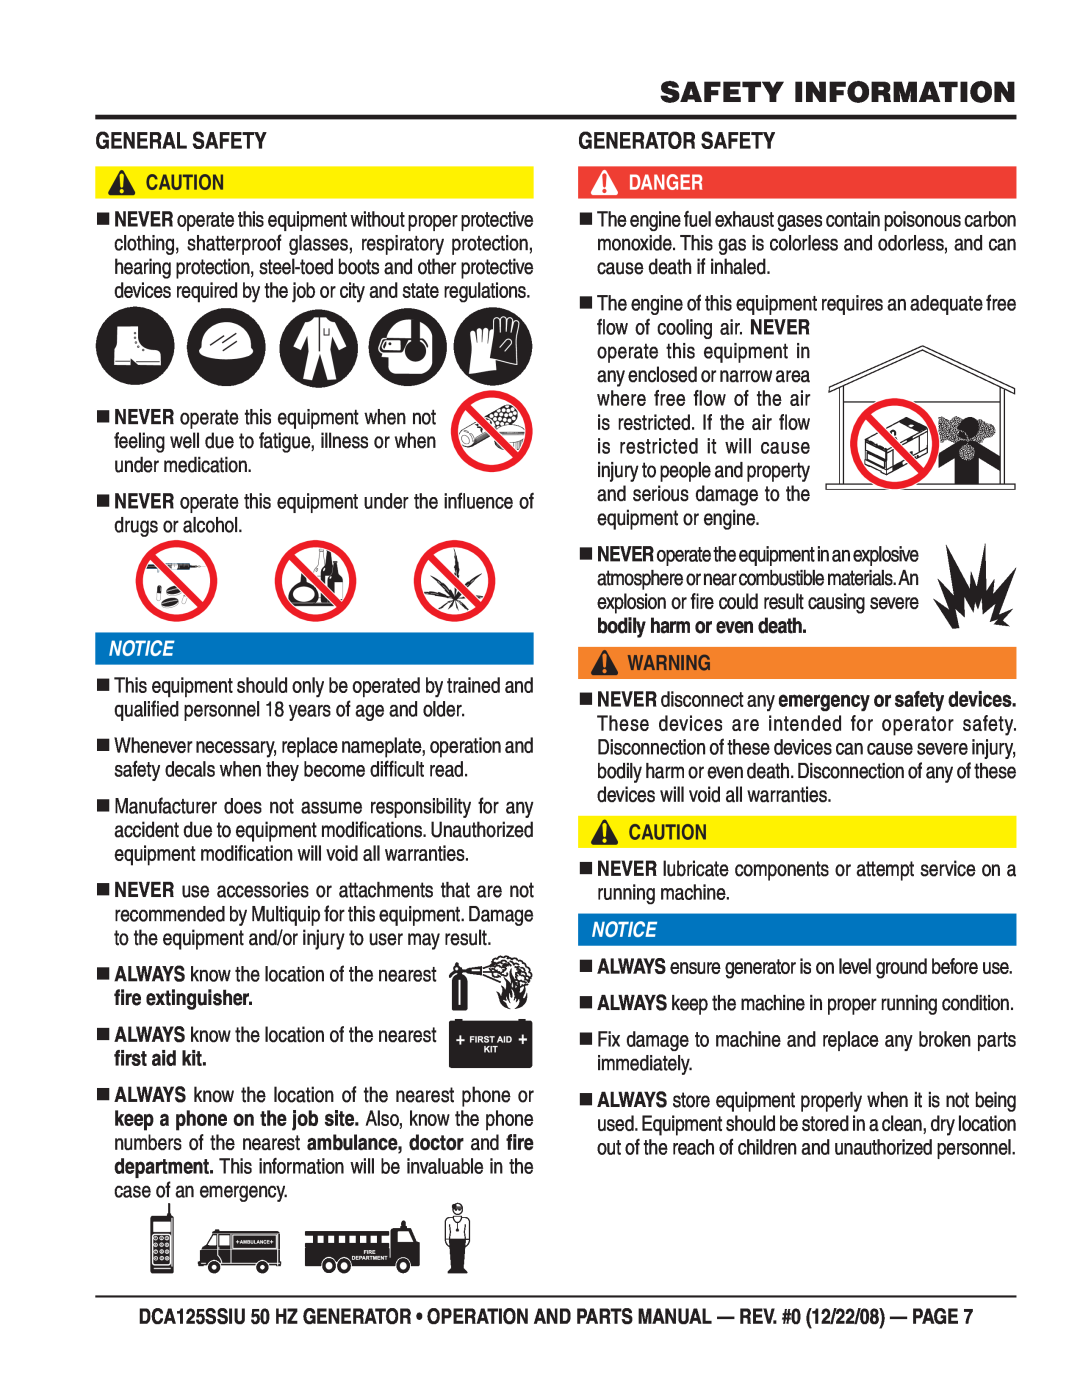 Multiquip DCA125SSIU General Safety, Generator Safety, ﬁre extinguisher, ﬁrst aid kit, Safety Information, Notice, Danger 